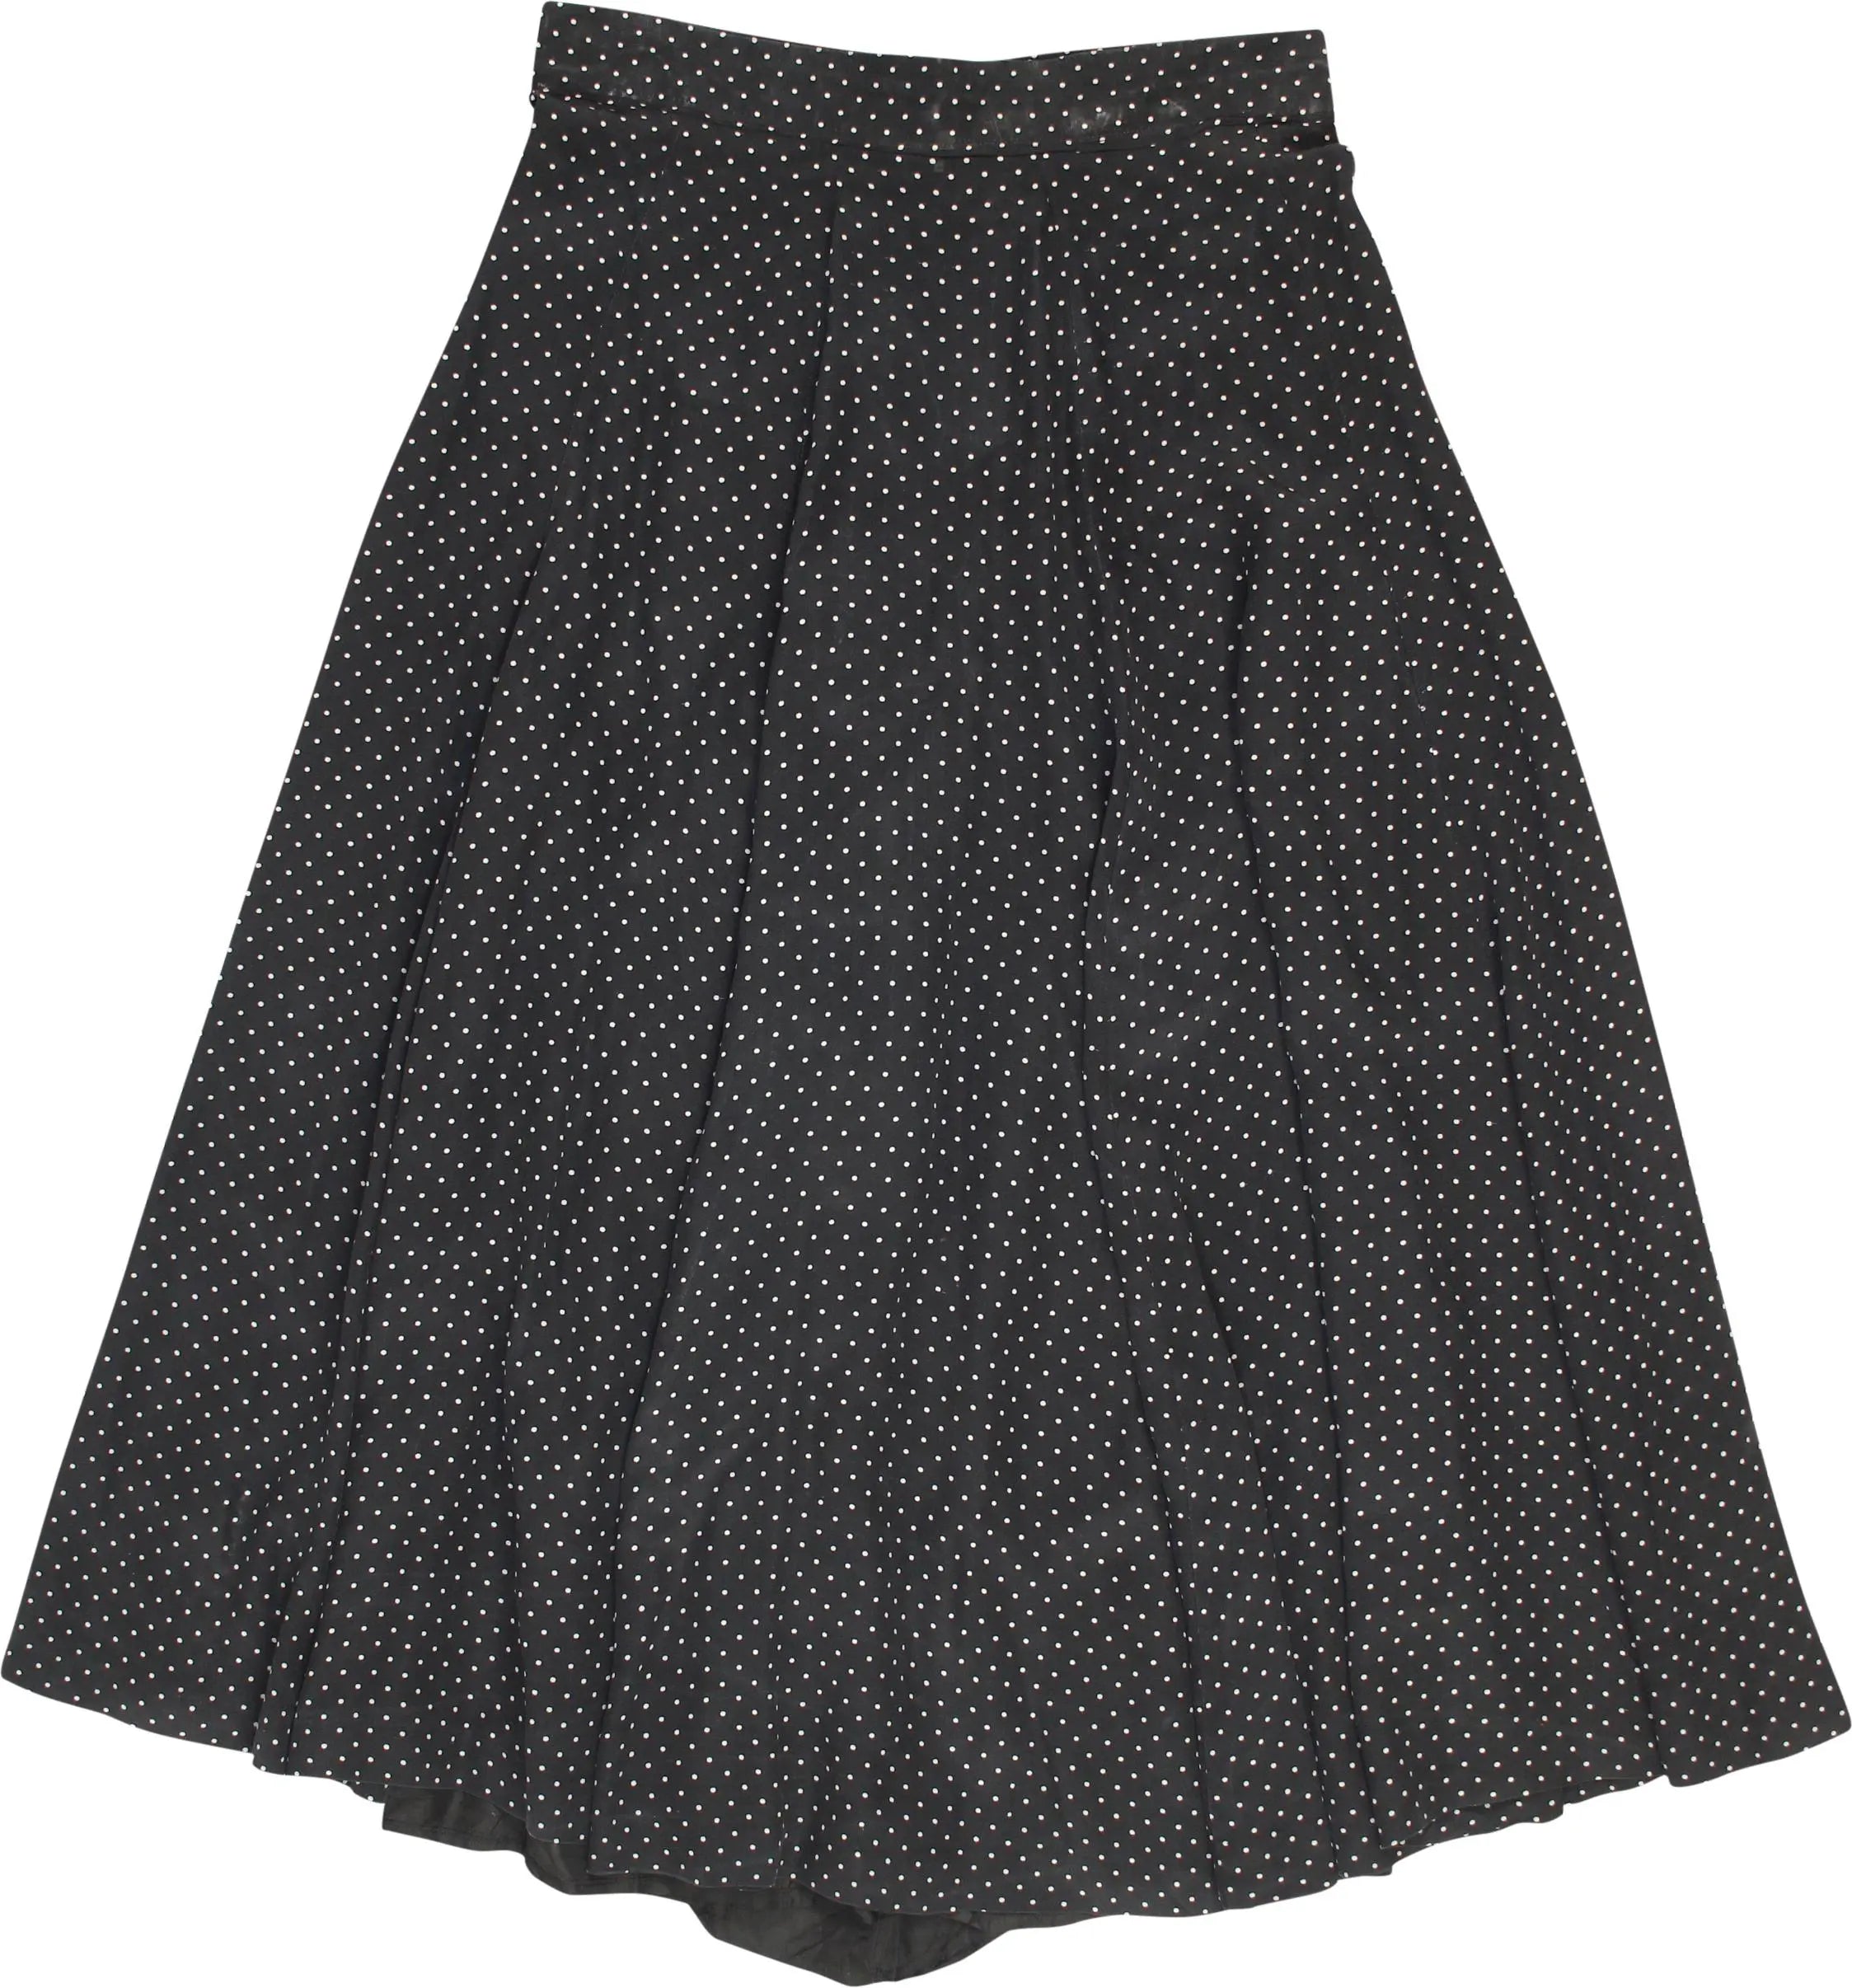 Handmade - Handmade Skirt with Polkadot Print- ThriftTale.com - Vintage and second handclothing